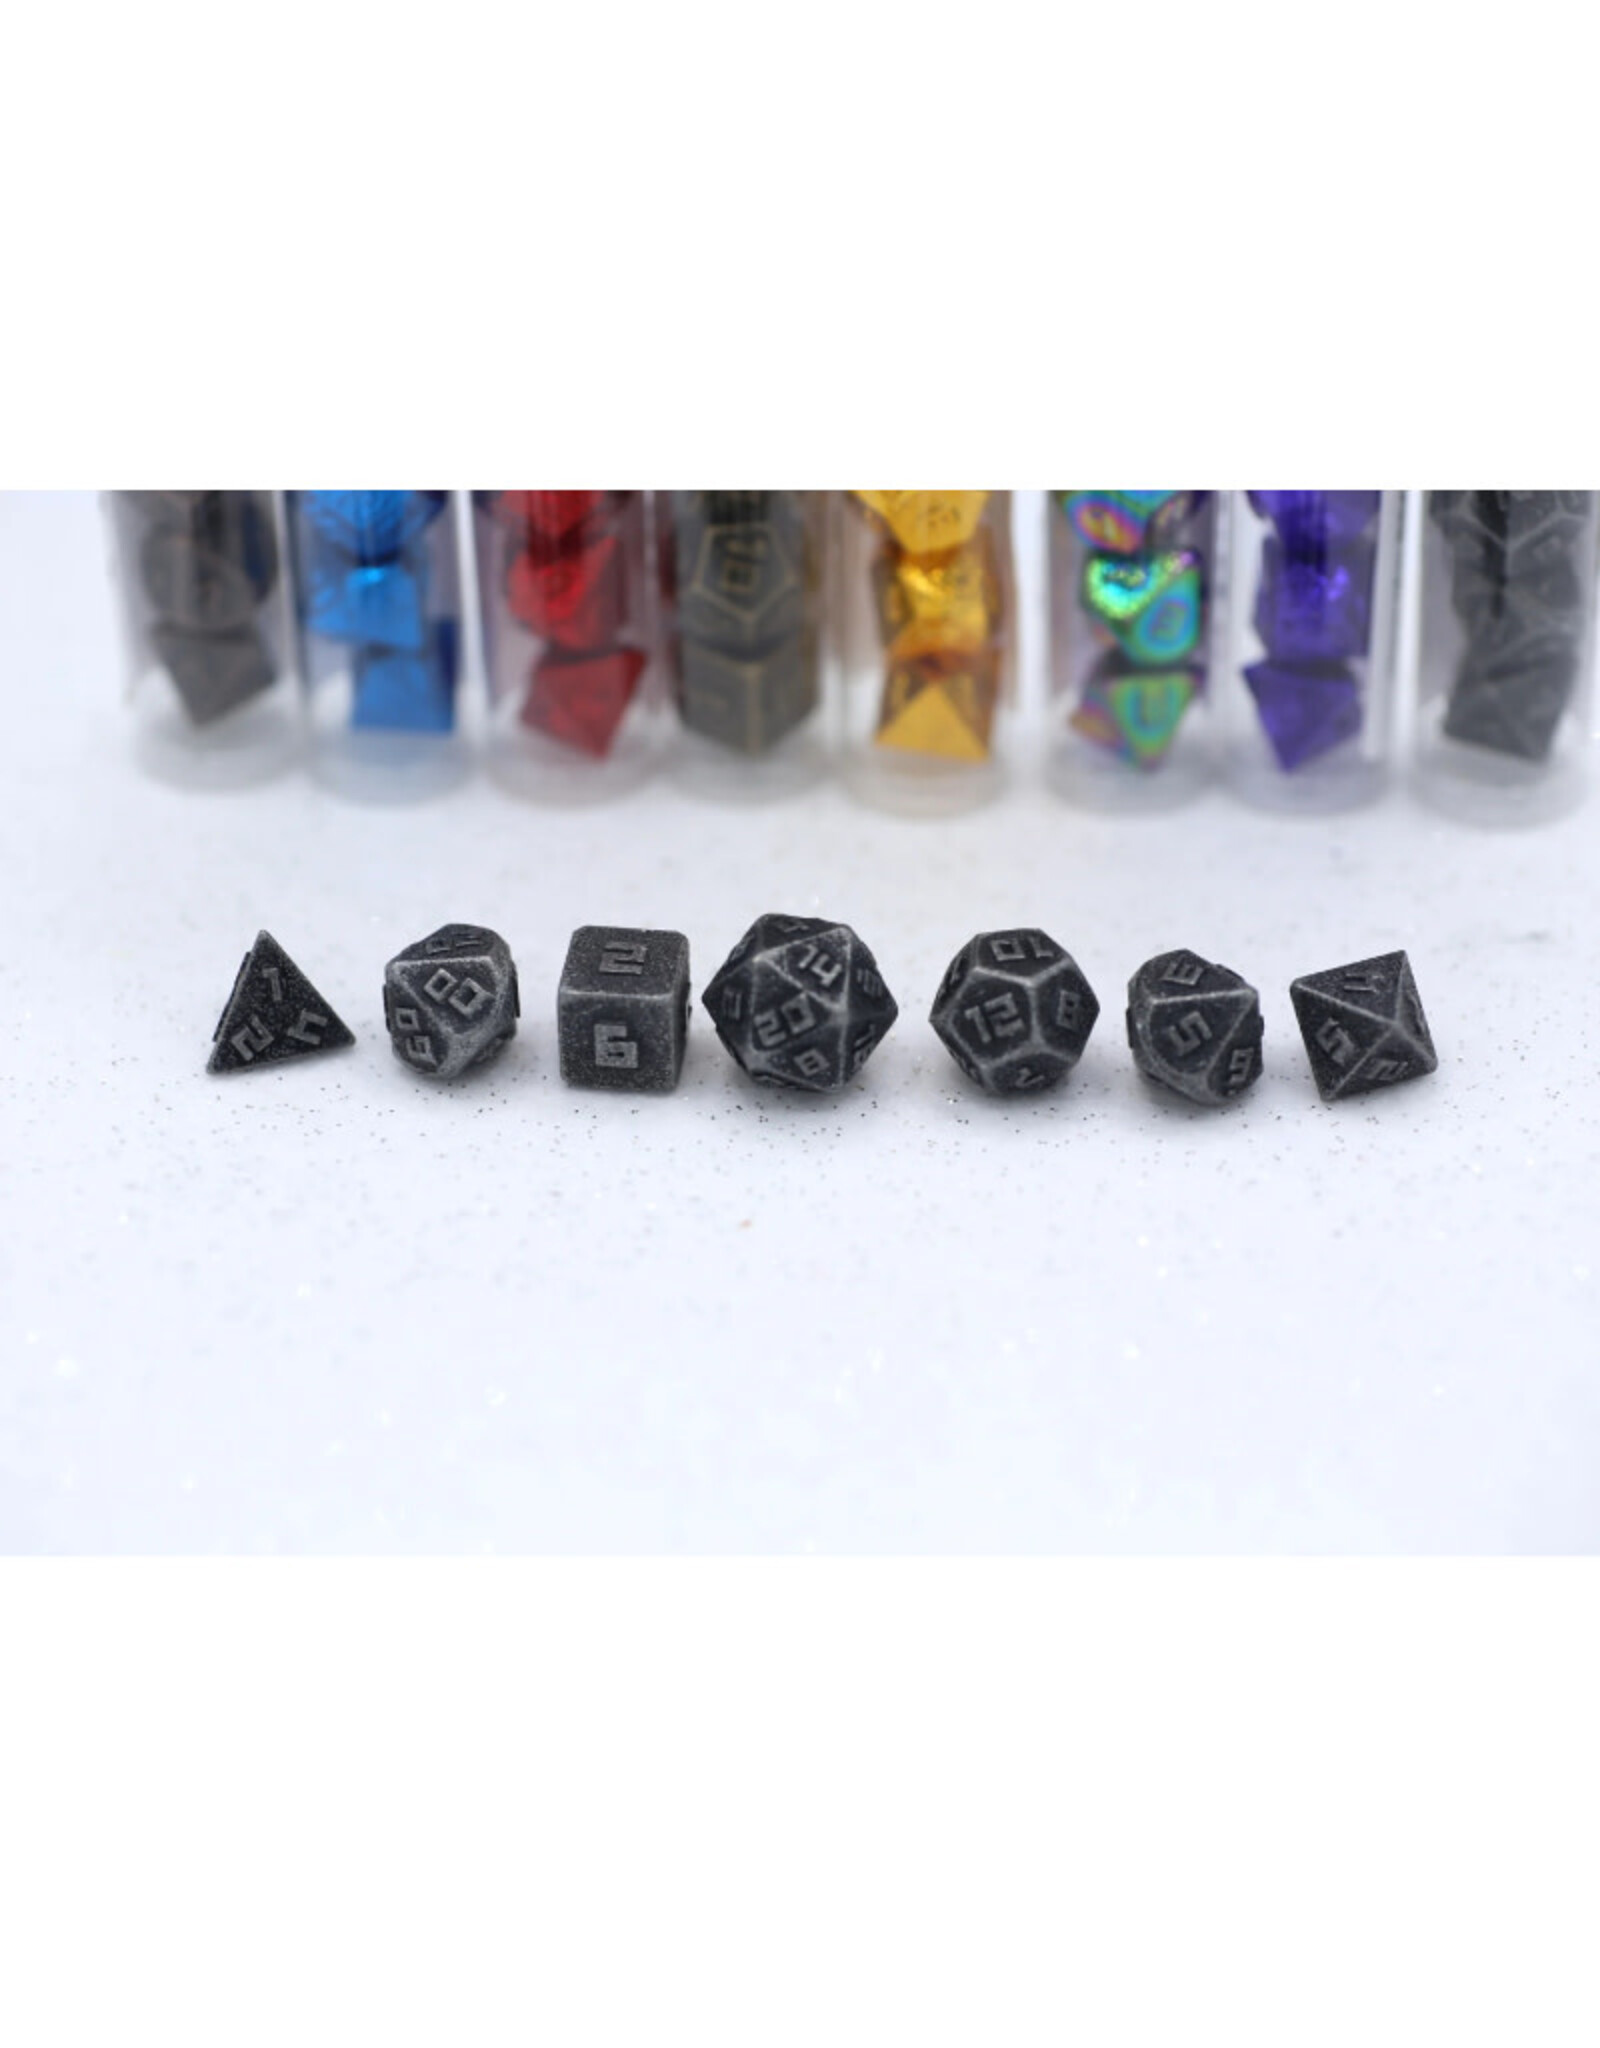 Hymgho Premium Dice Mini Metal Polyhedral Dice Set (7) Ancient Silver